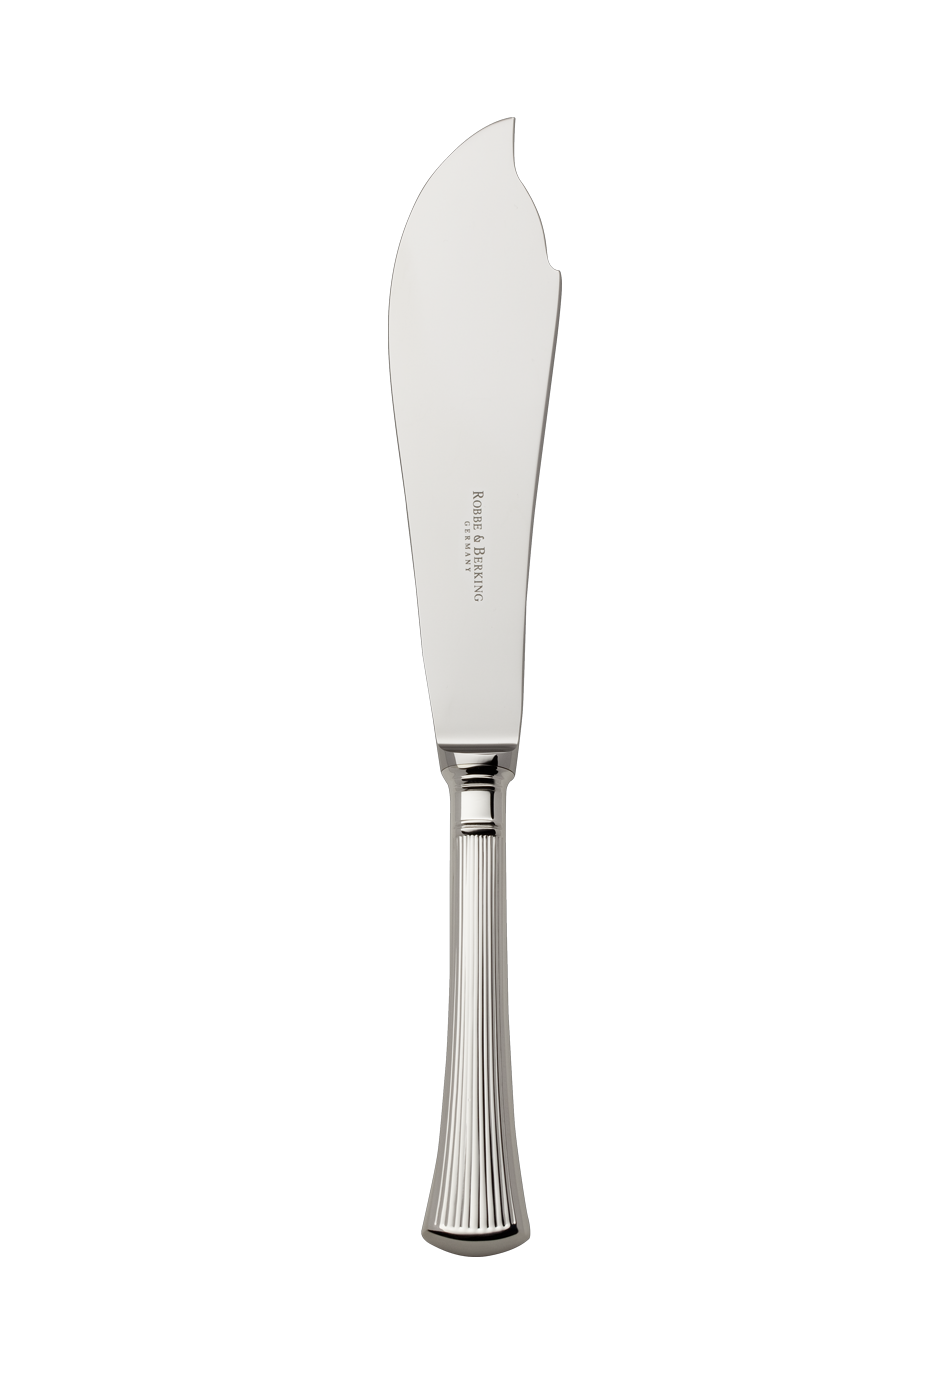 Avenue Tart Knife (150g massive silverplated)